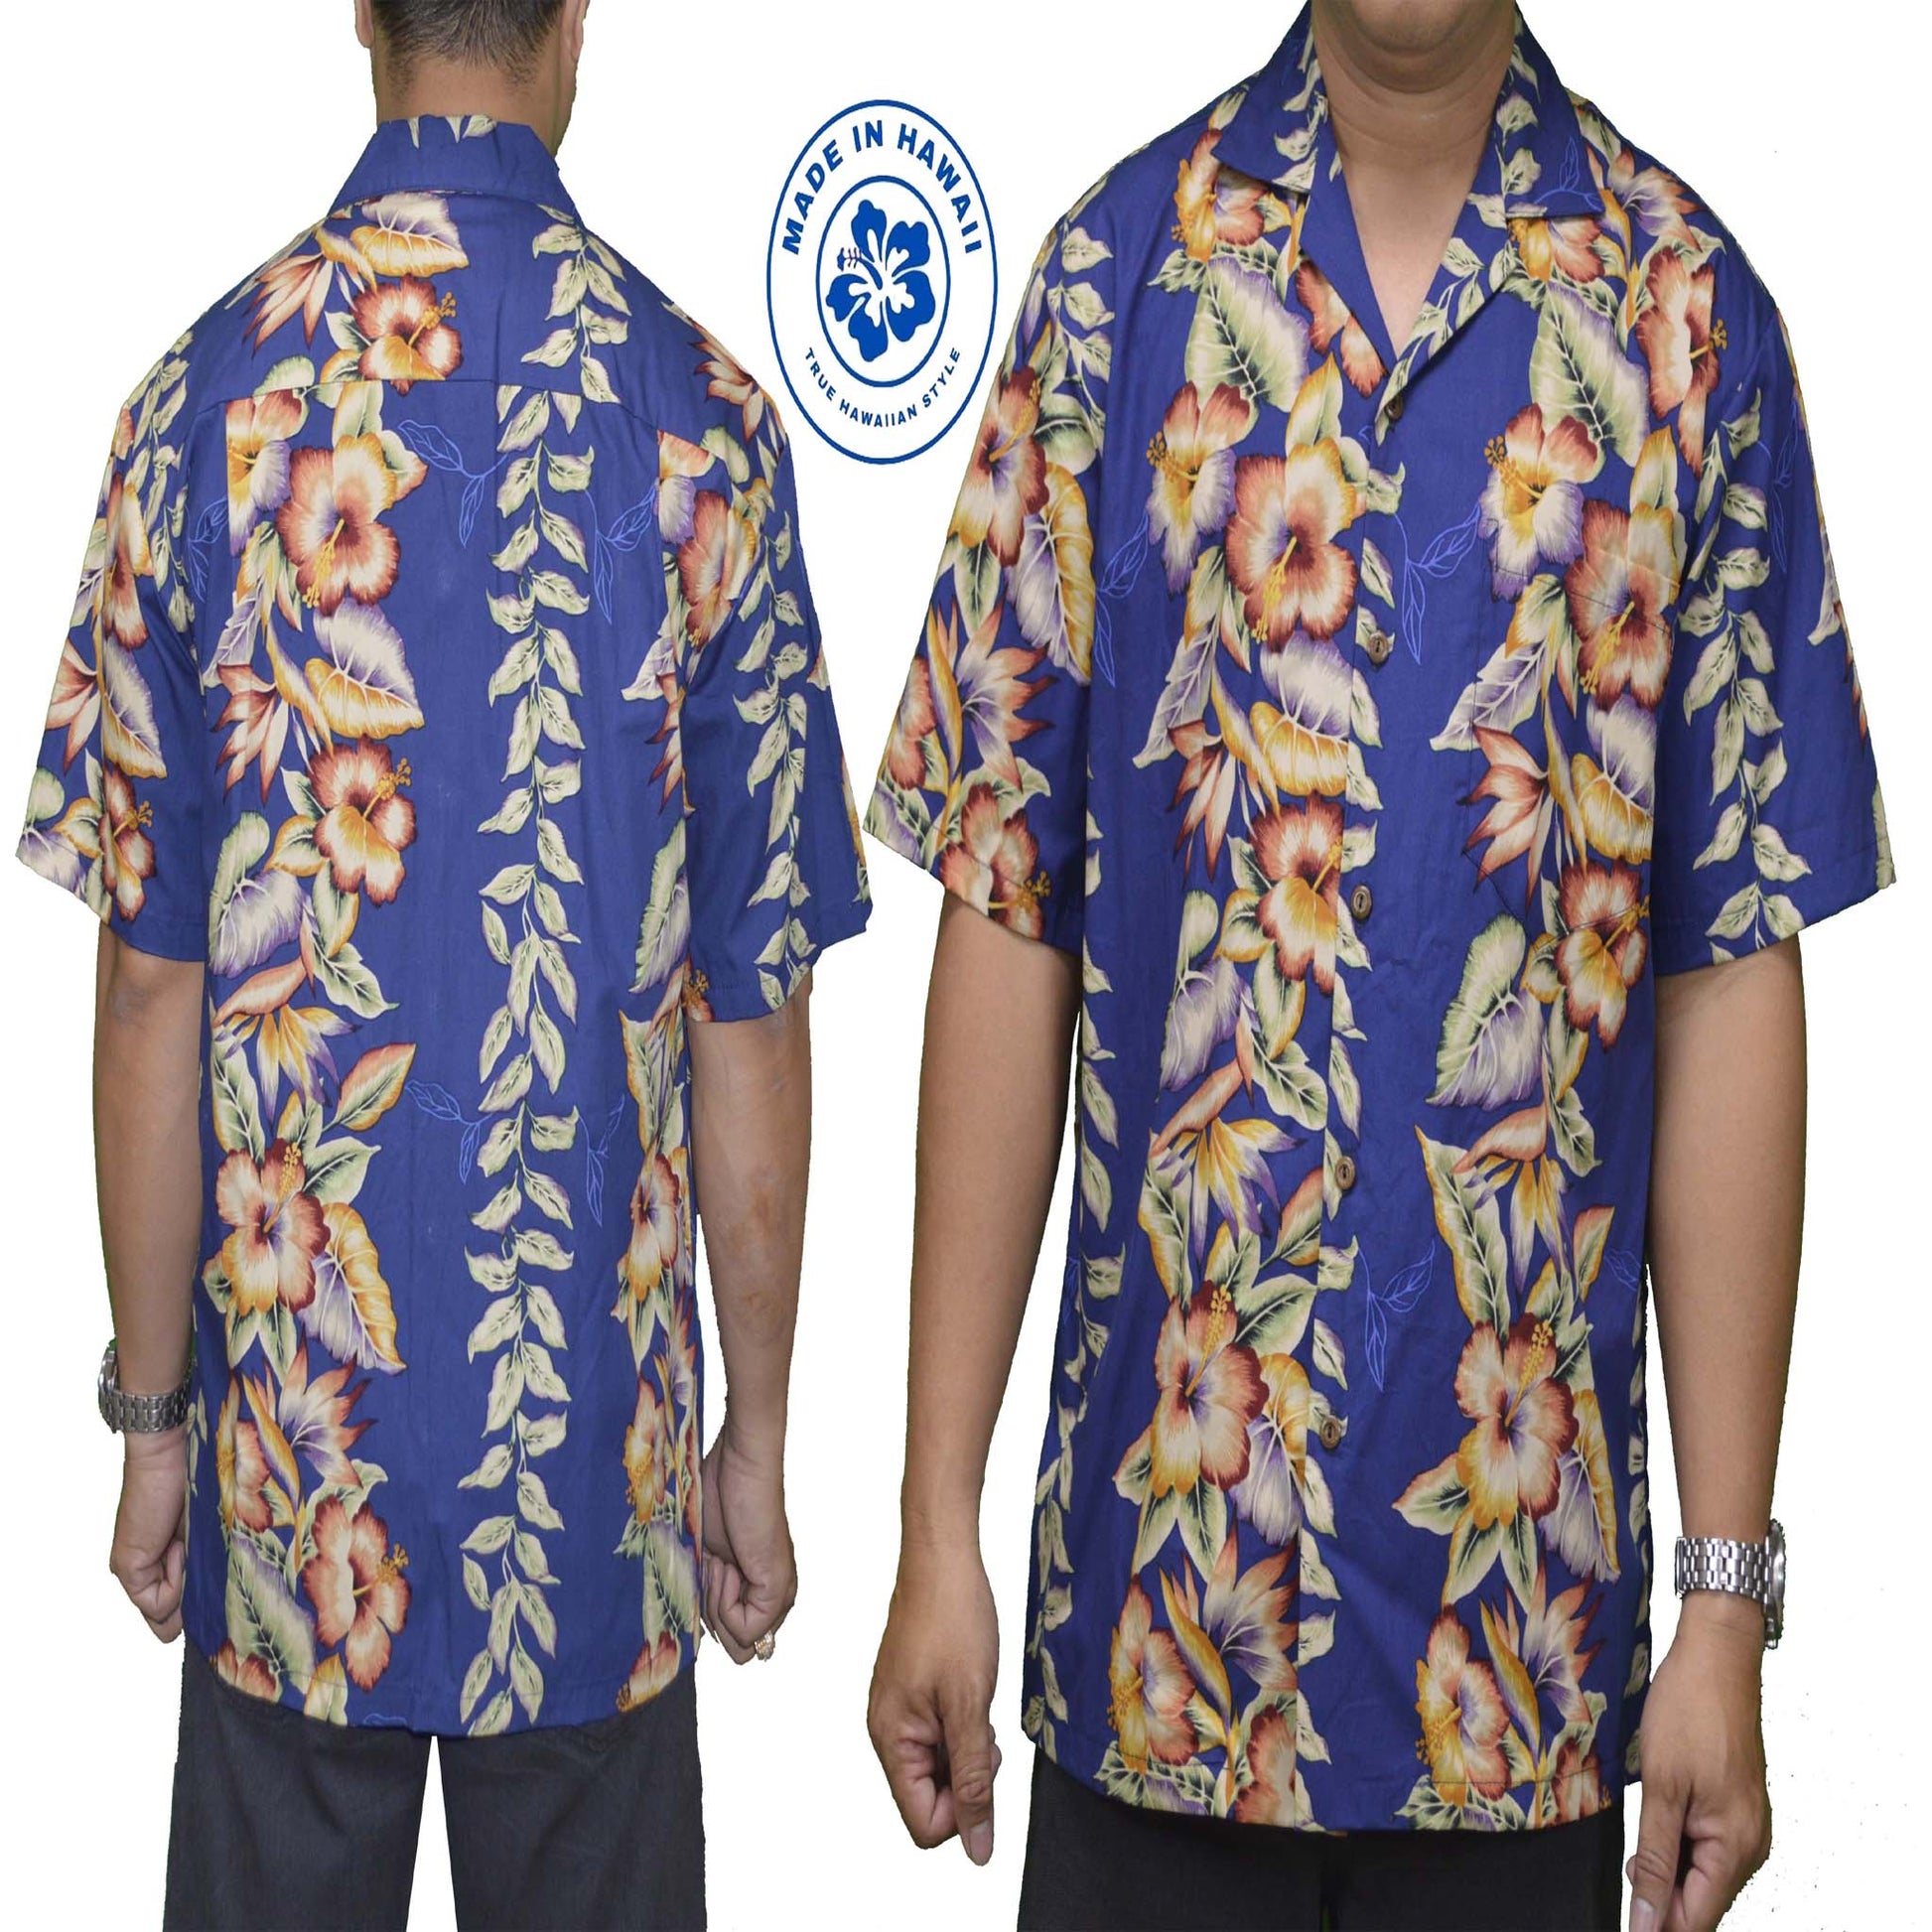 made in Hawaii aloha Hawaiian shirt with vintage anthurium theme